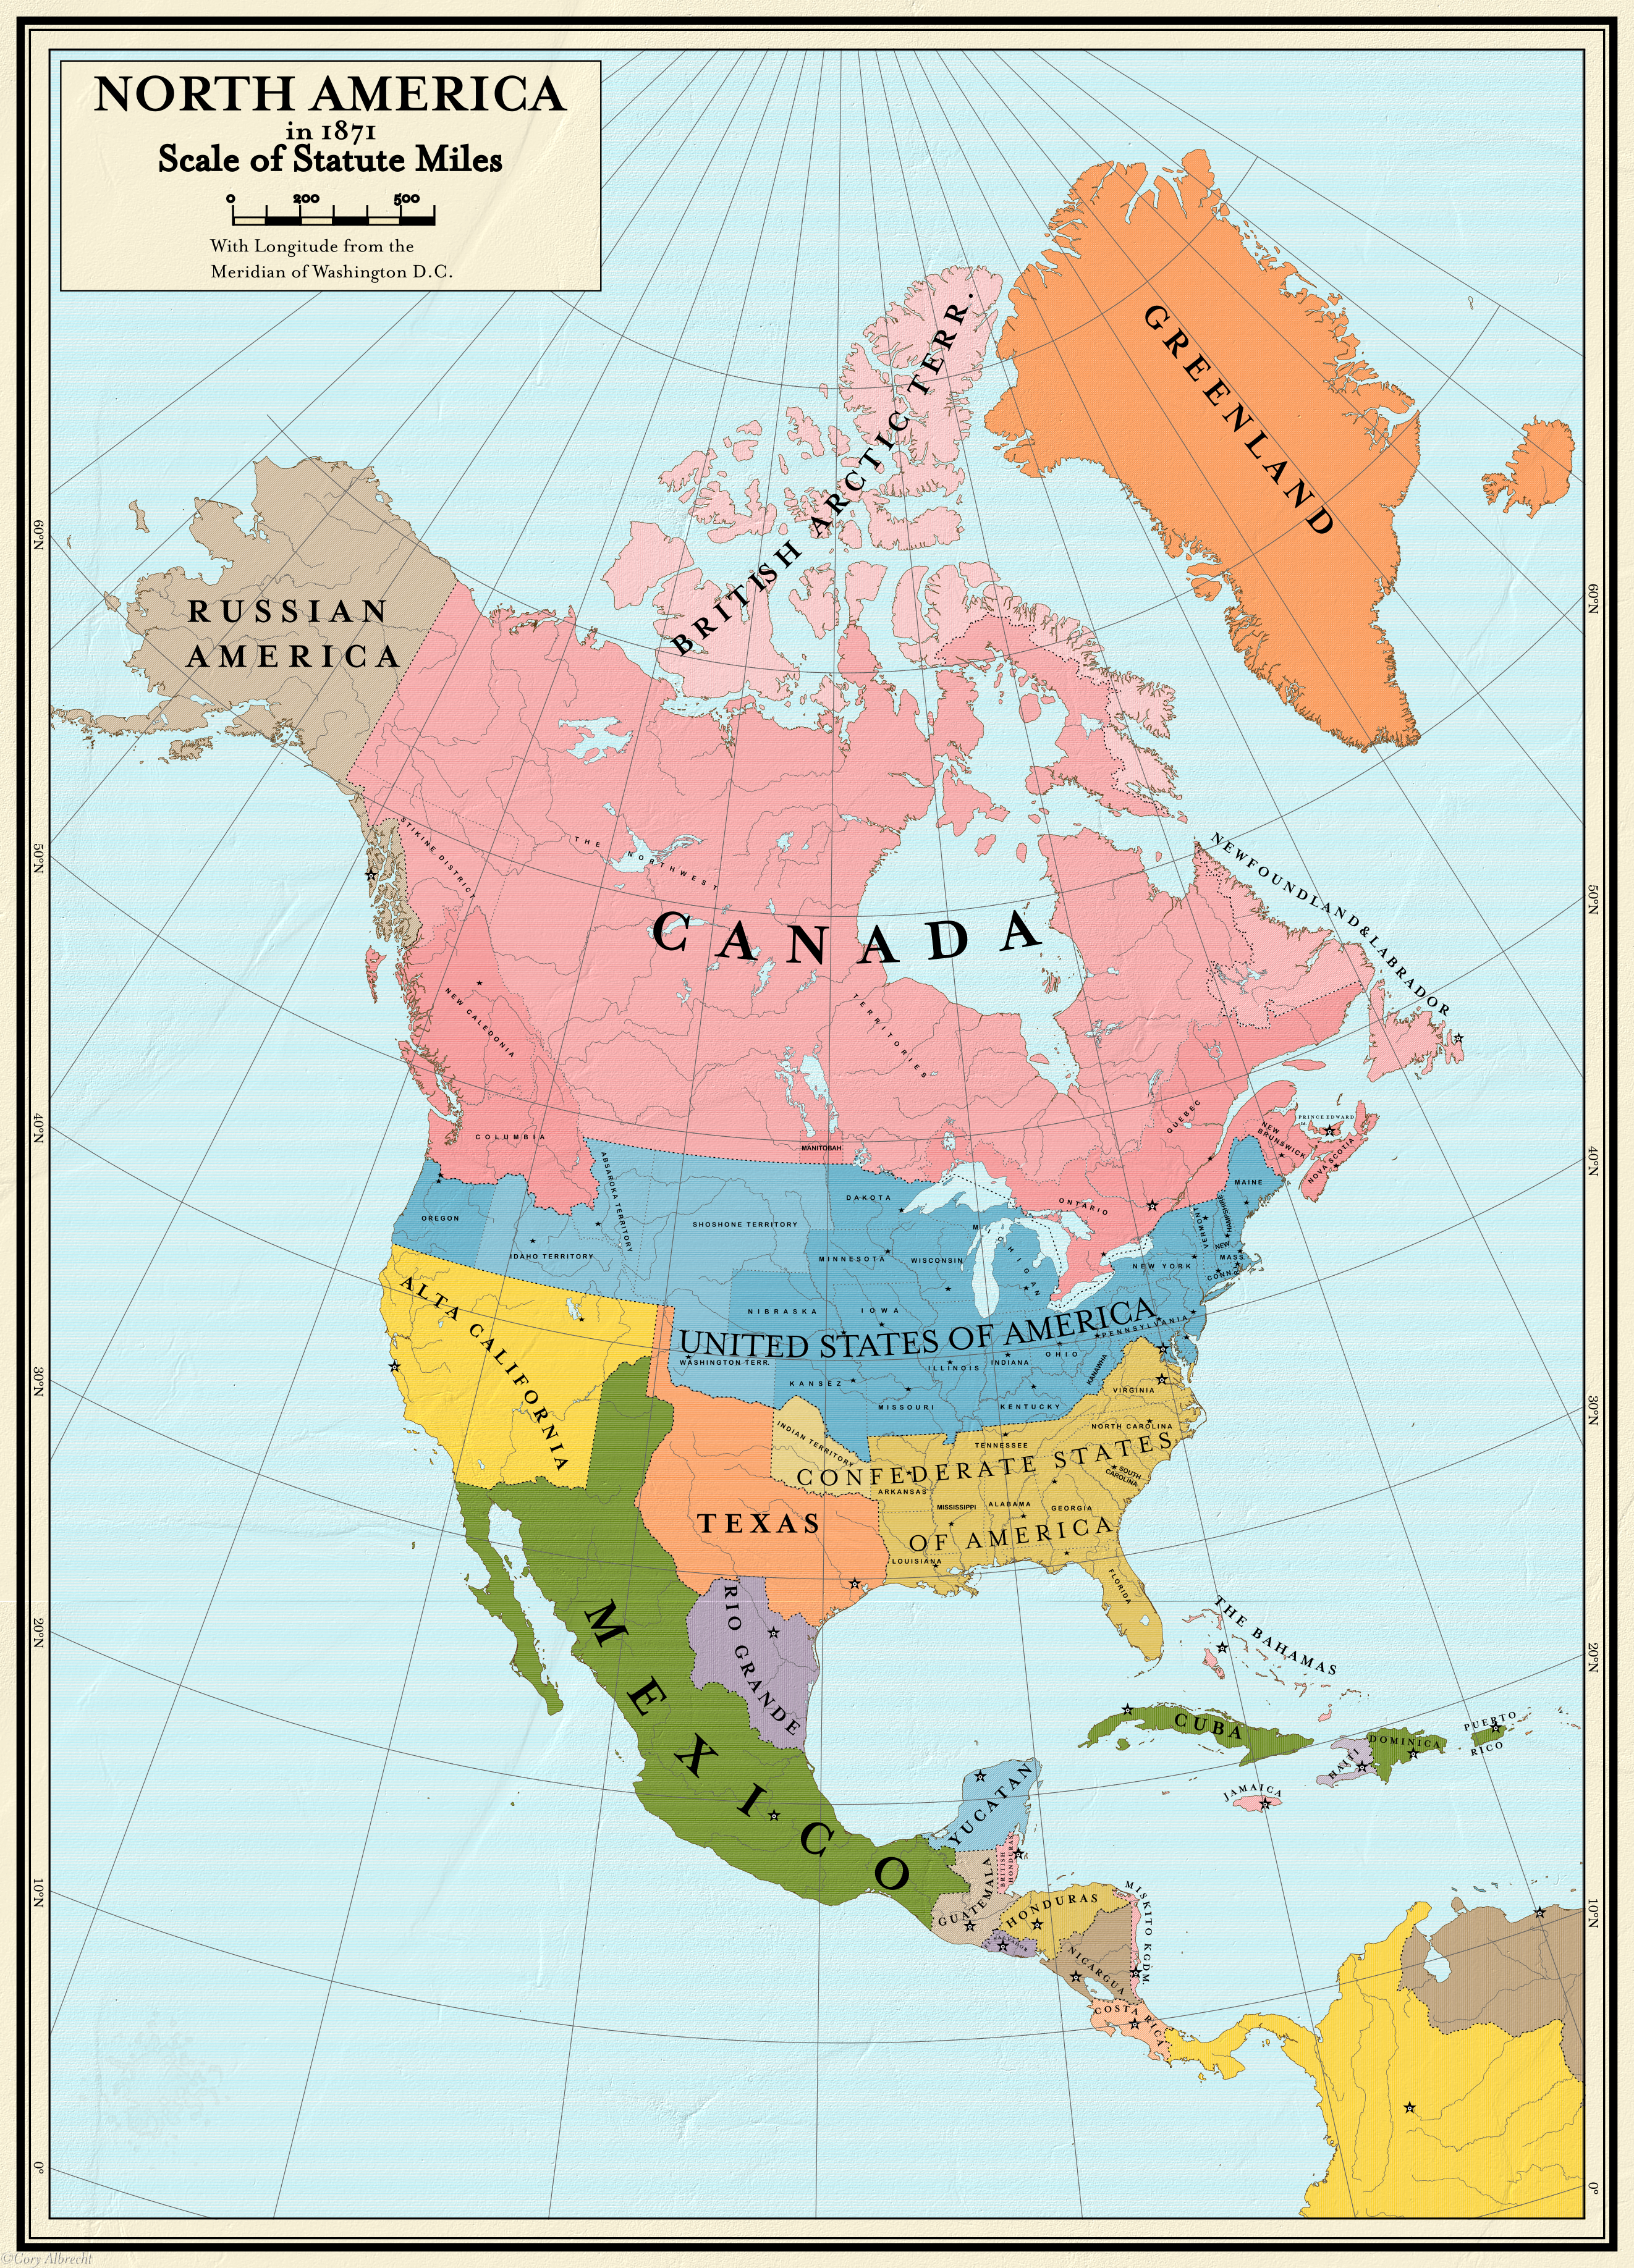 North America 1871